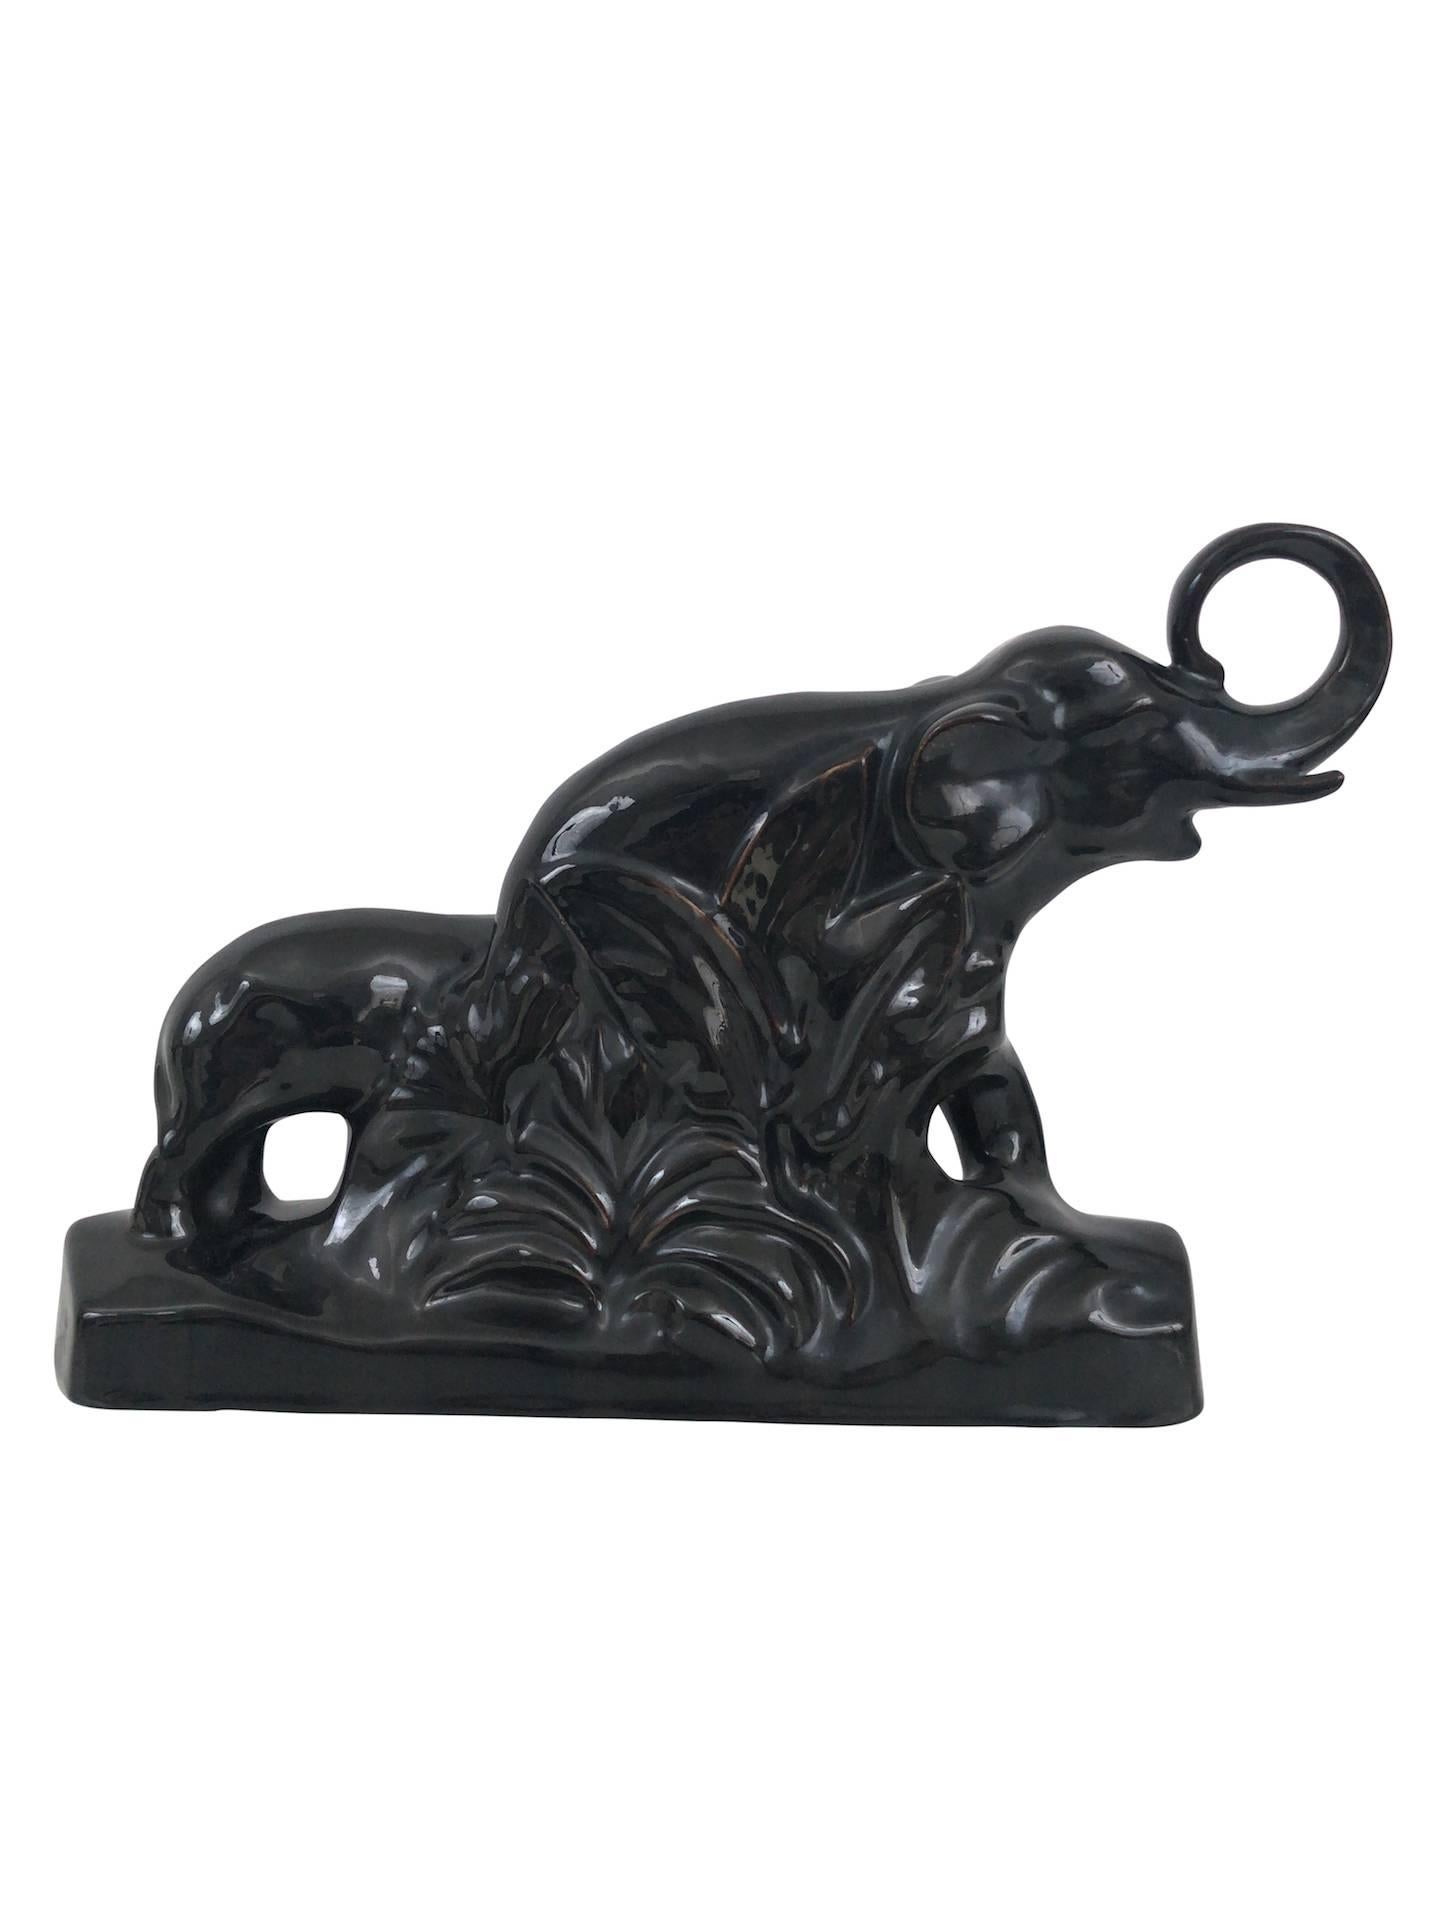 French L. Francois, Black Glazed Ceramic Elephants, France, 1930s For Sale